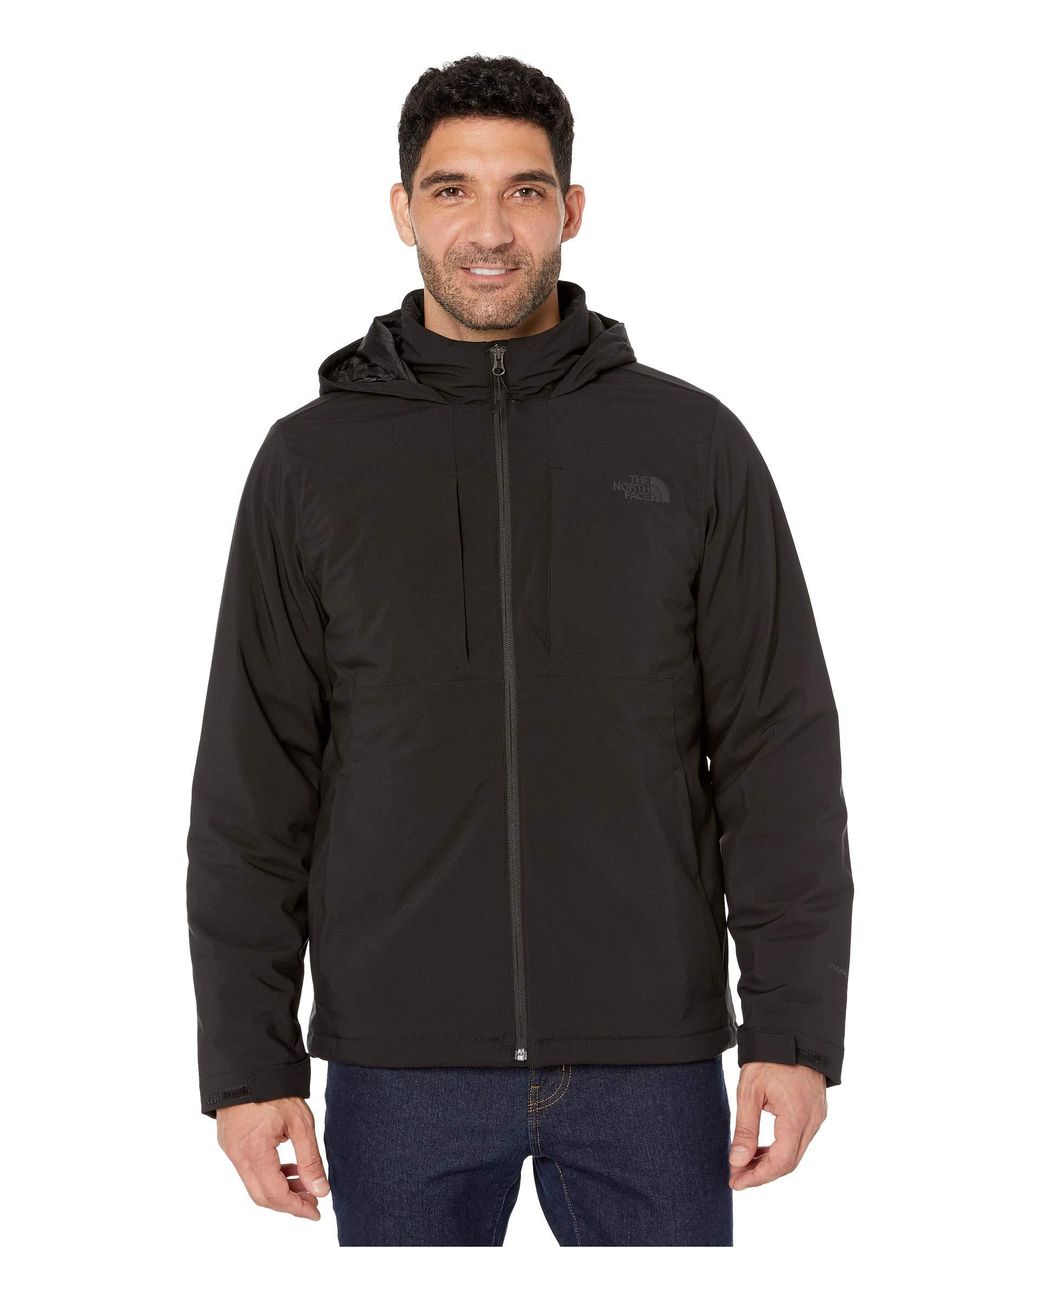 The North Face Fleece Apex Elevation Jacket in Black for Men - Lyst